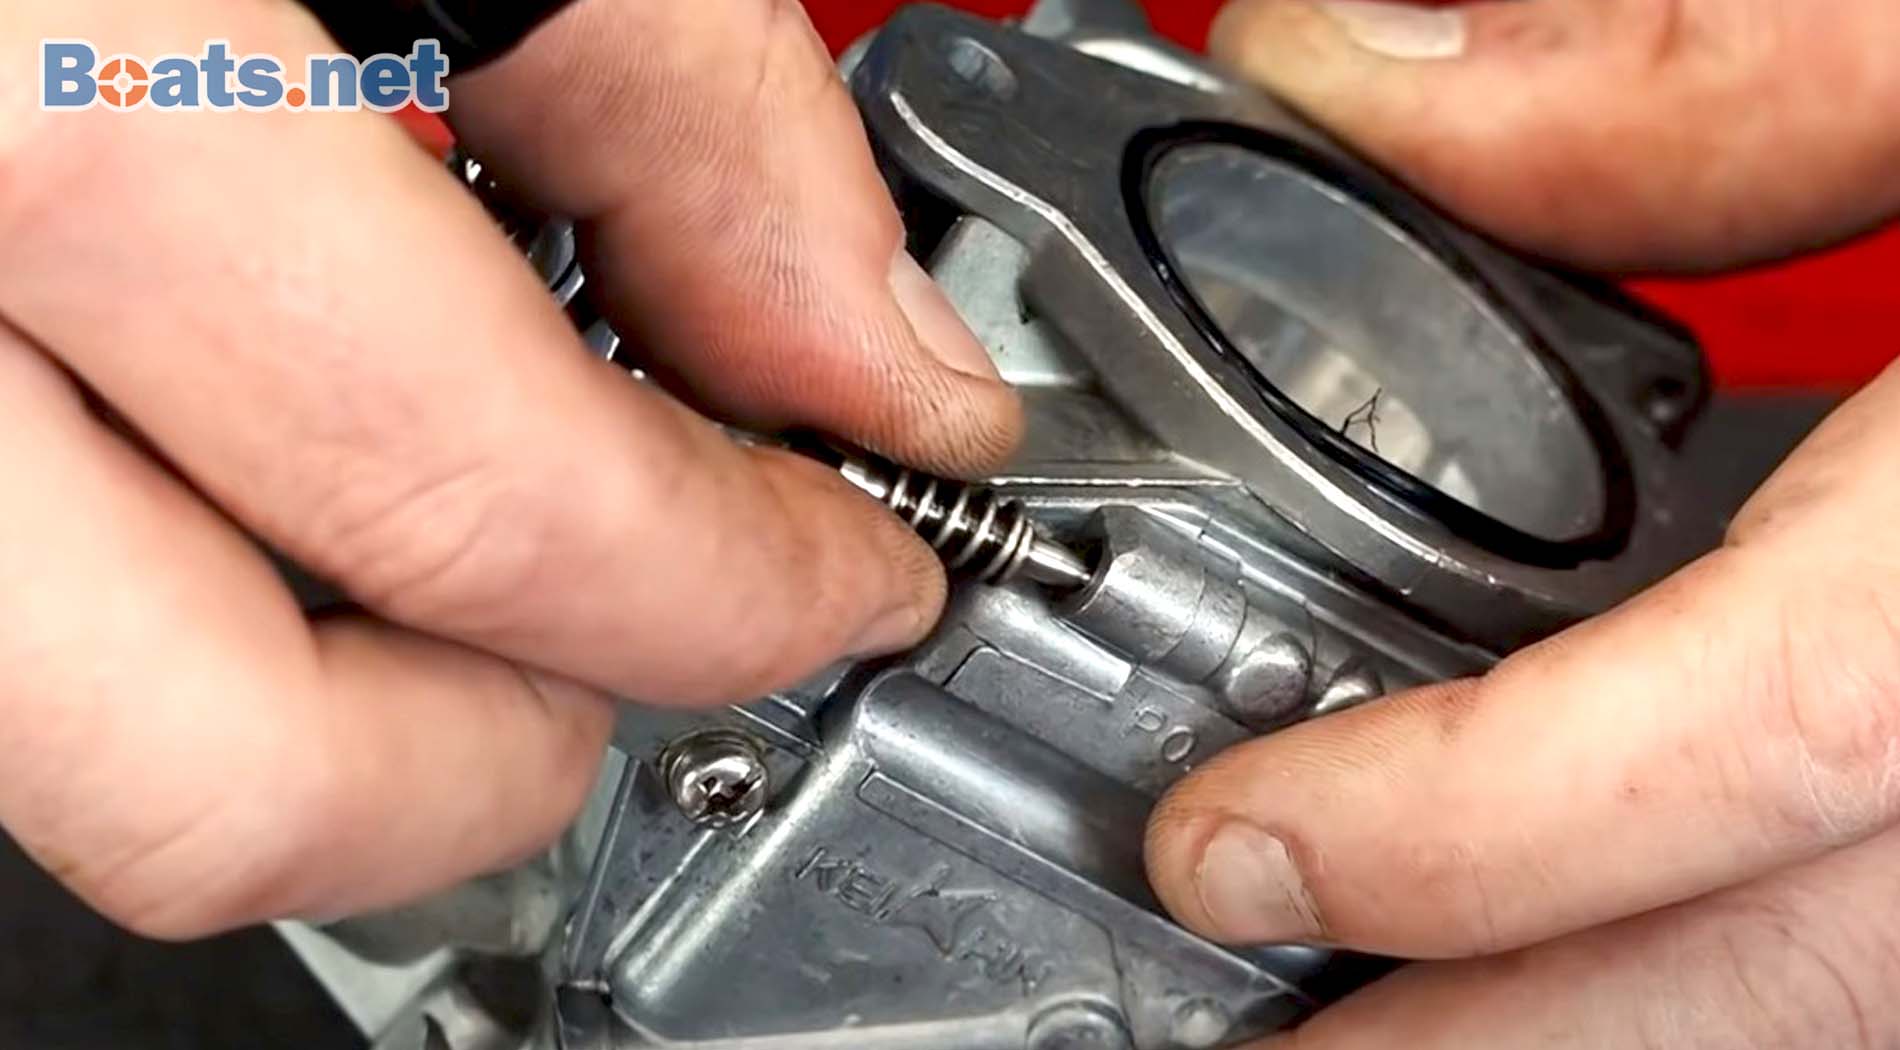 Yamaha outboard carburetor cleaning pilot screw